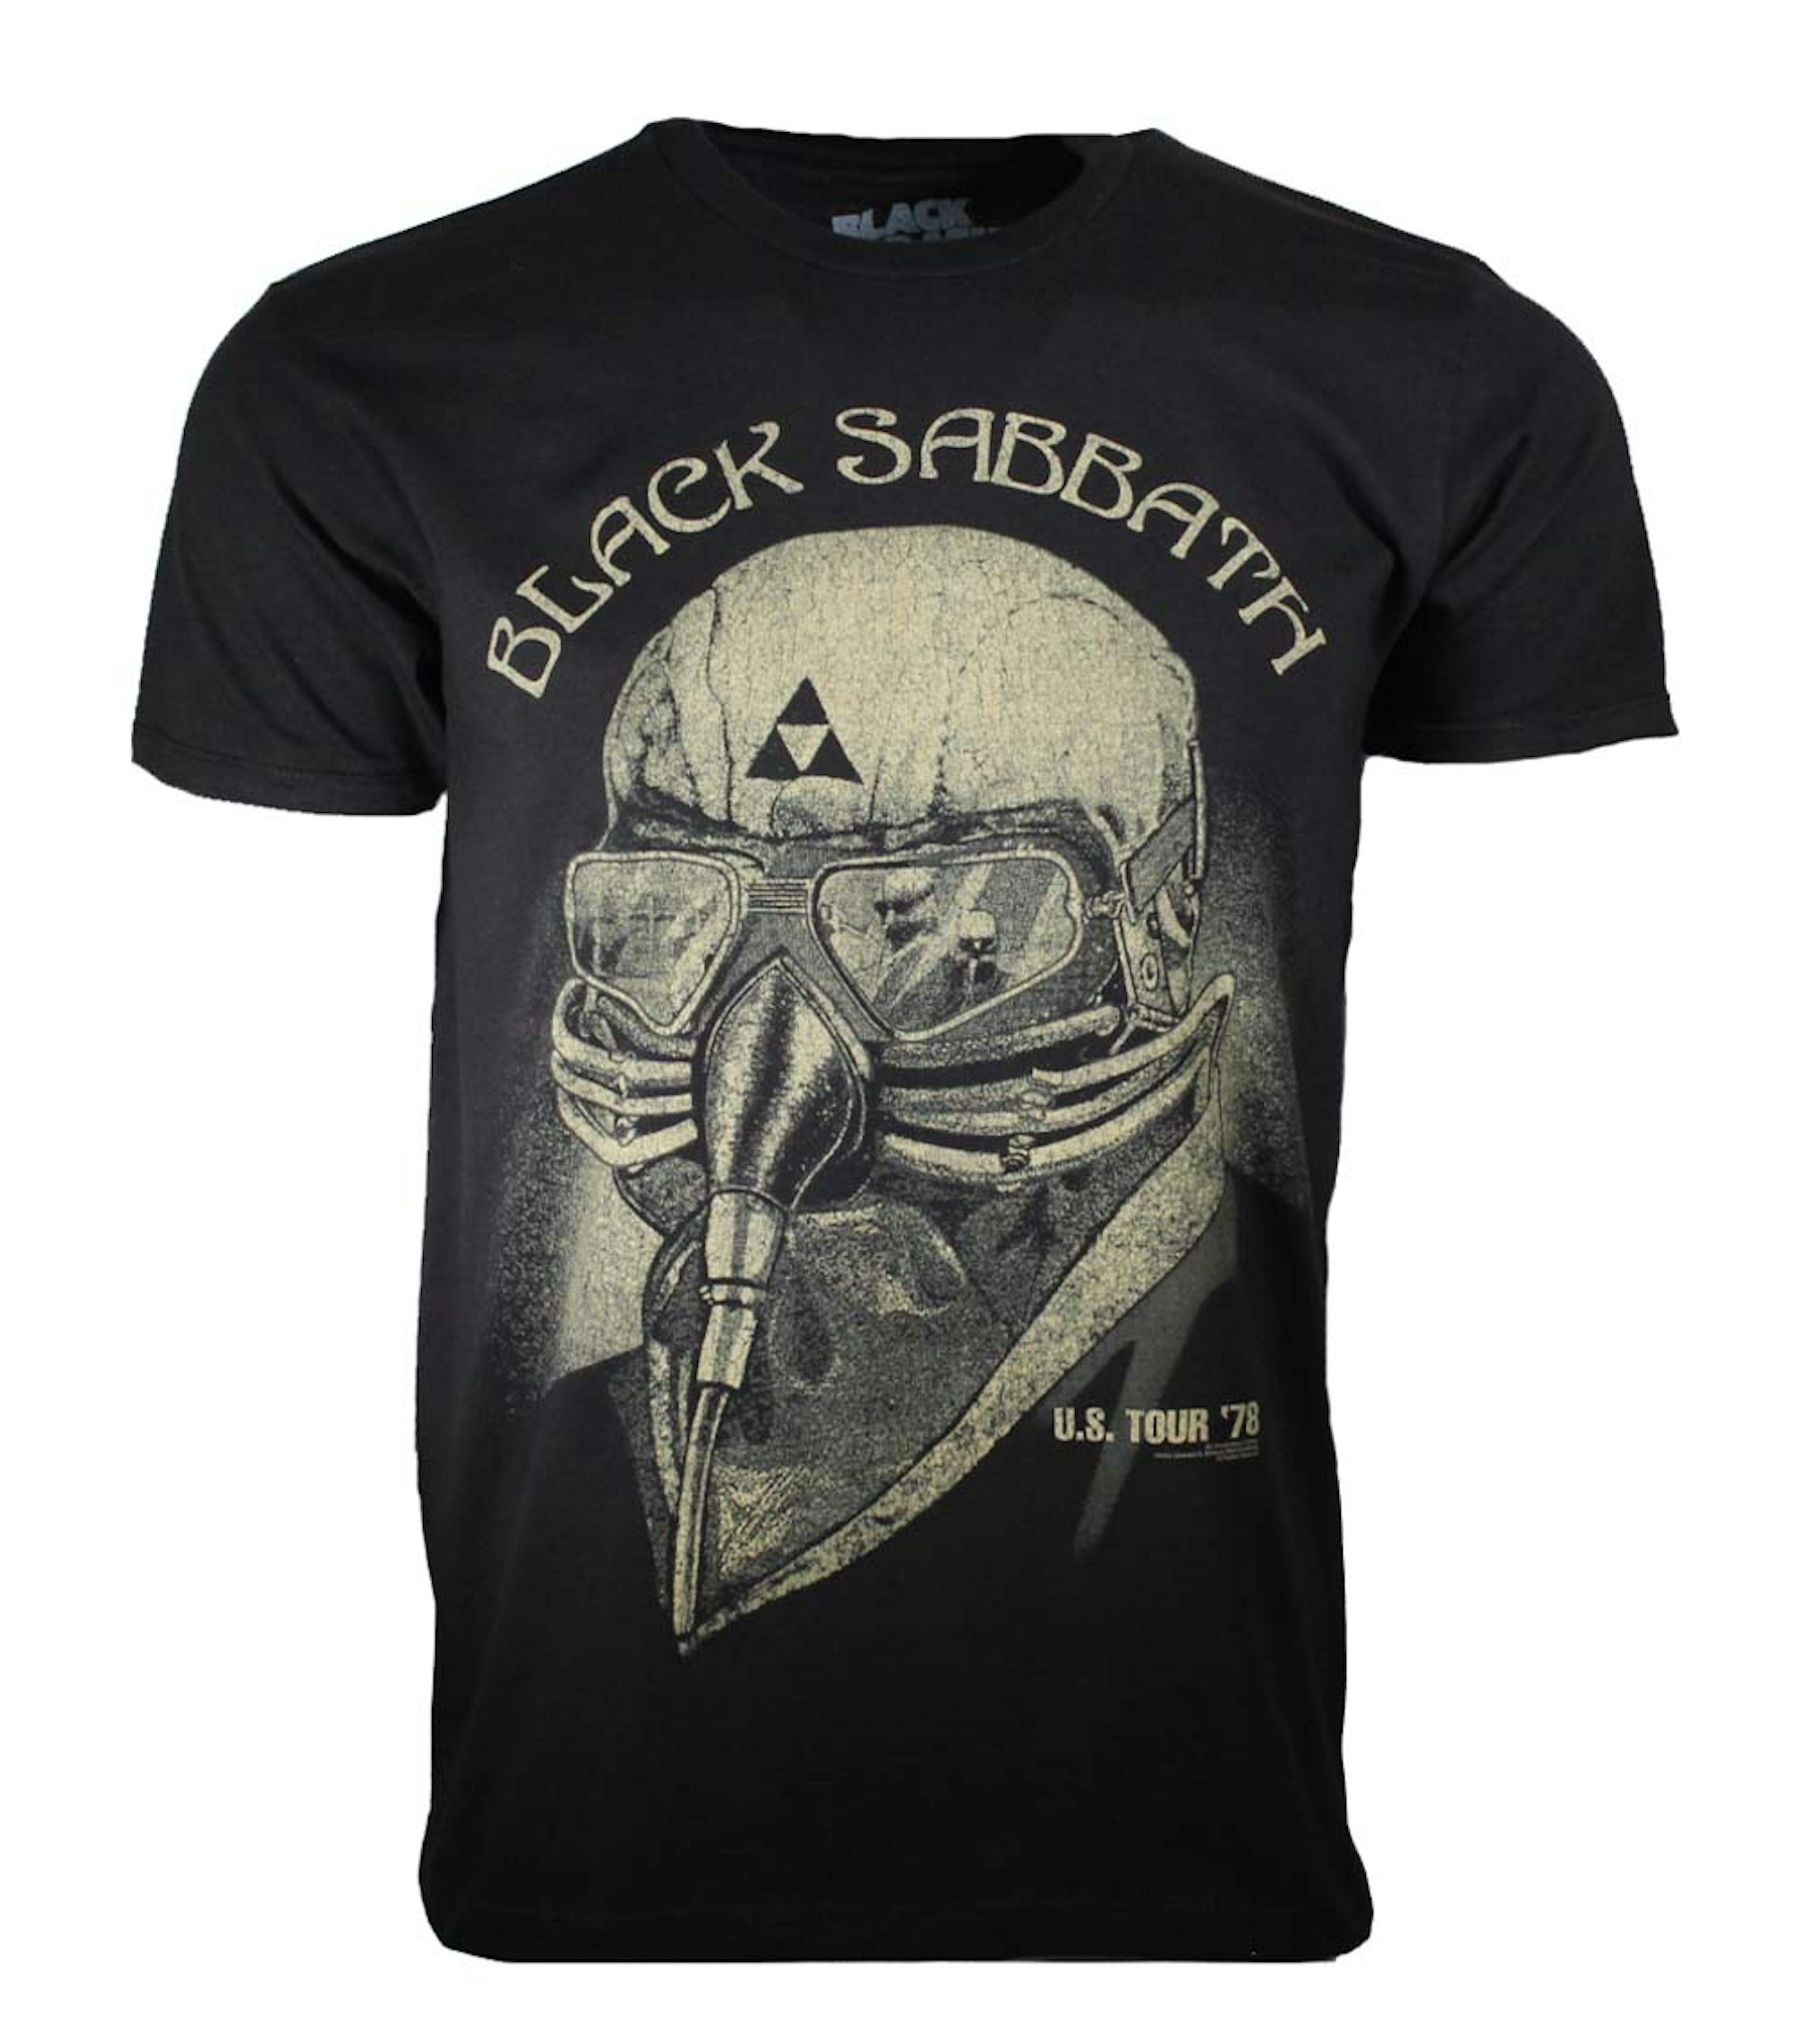 Black Sabbath Shirt | Black U.S. Tour '78 T-Shirt